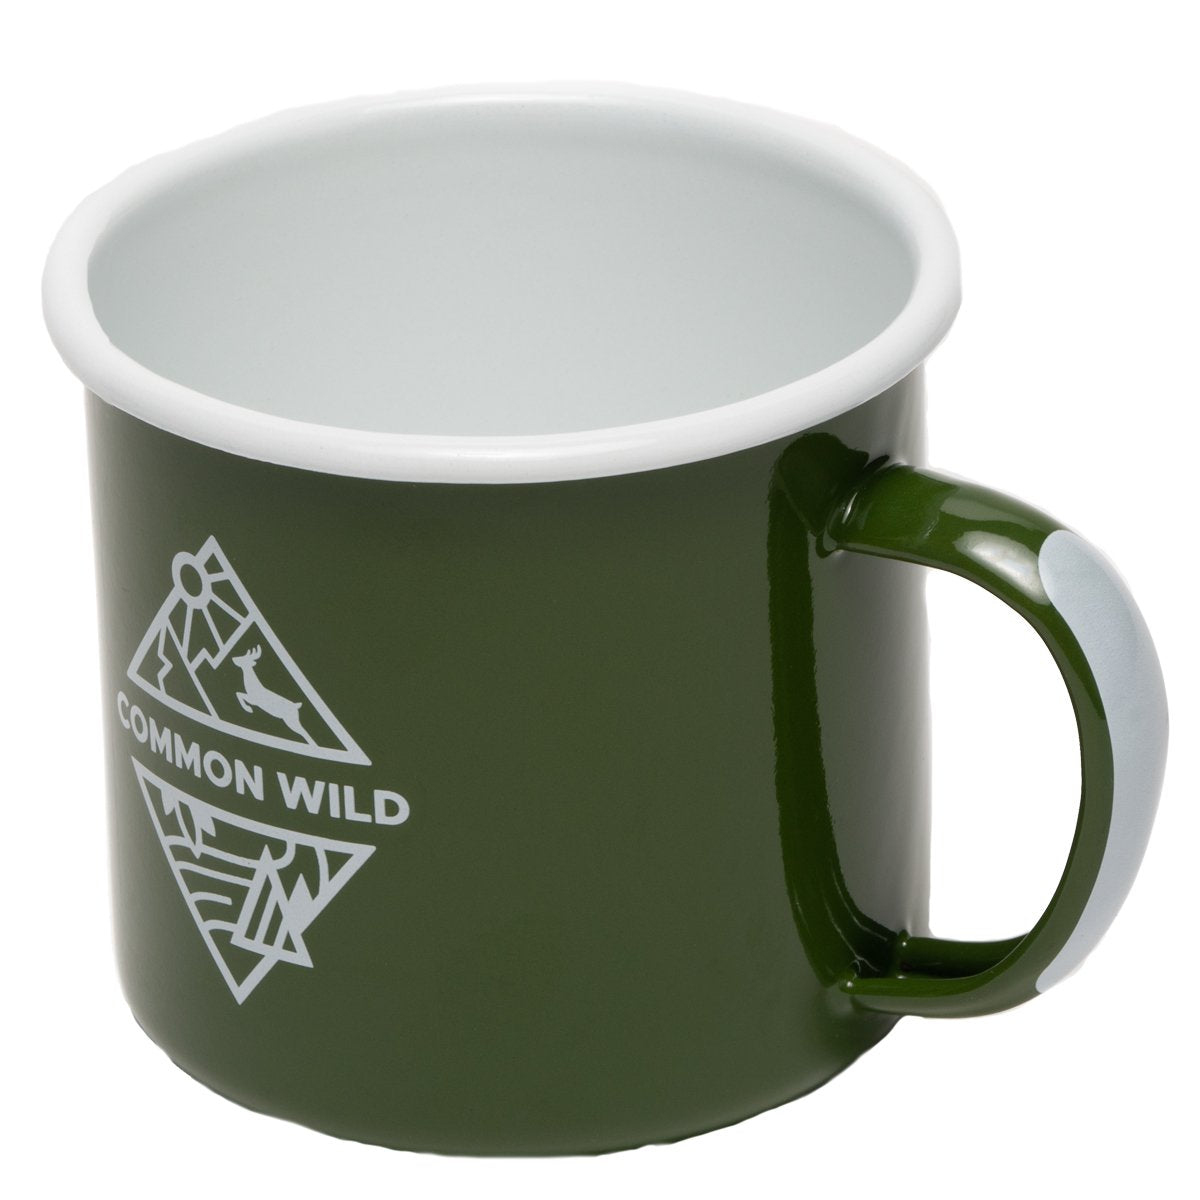 Common Wild Camp Mug